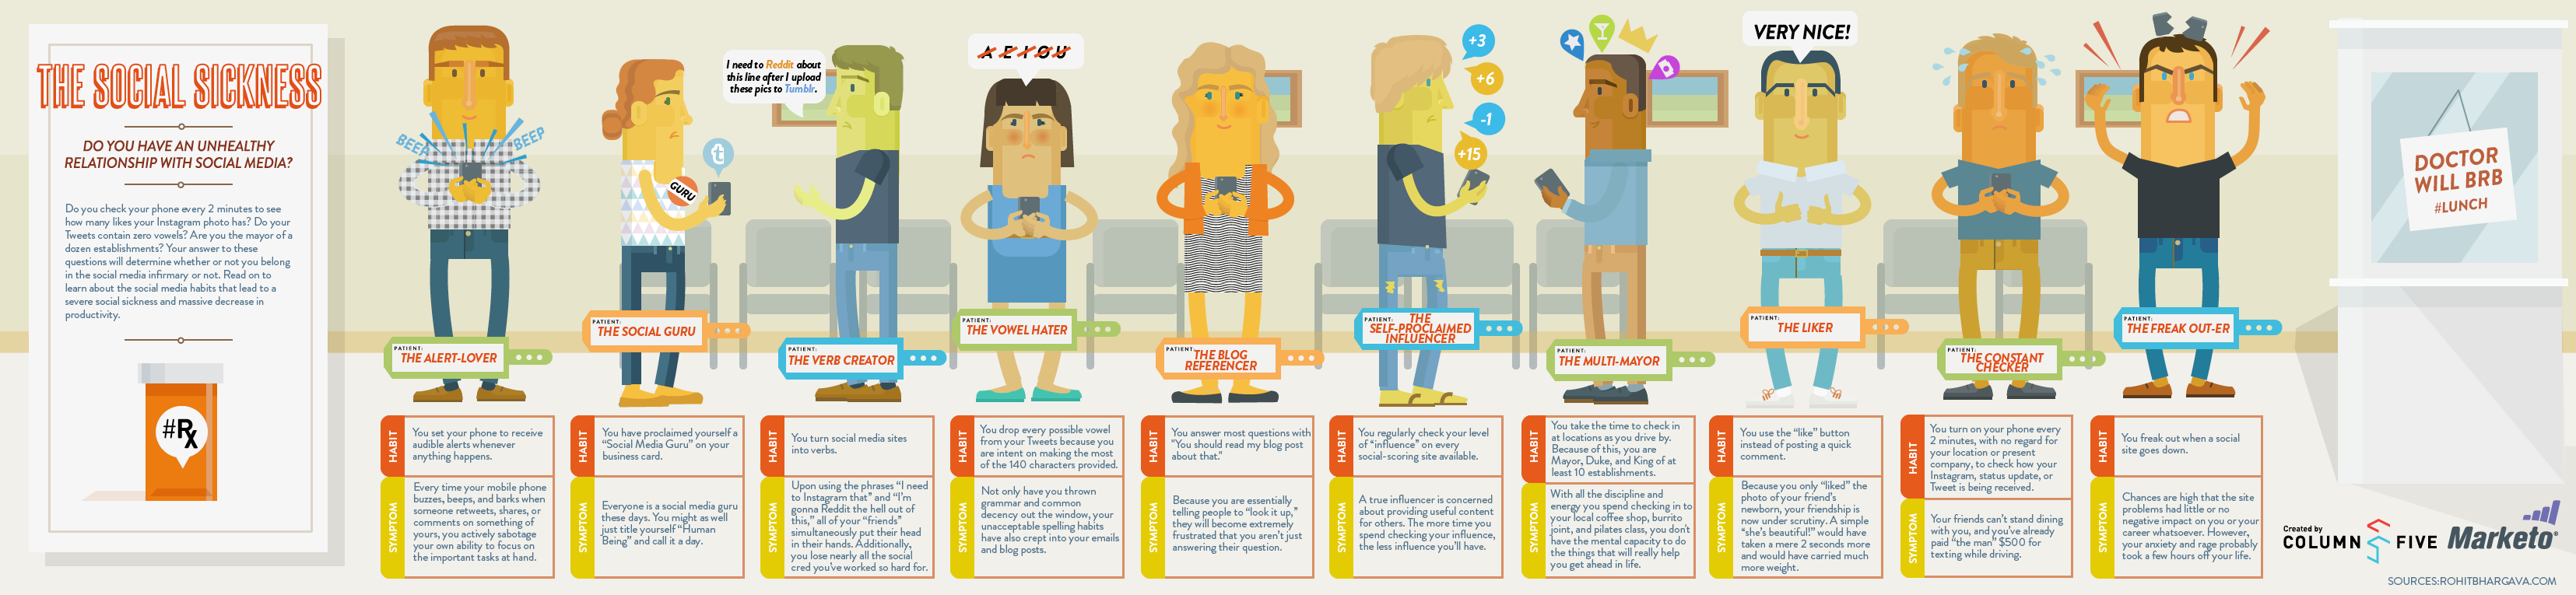 social-media-addiction-personalities-infographic